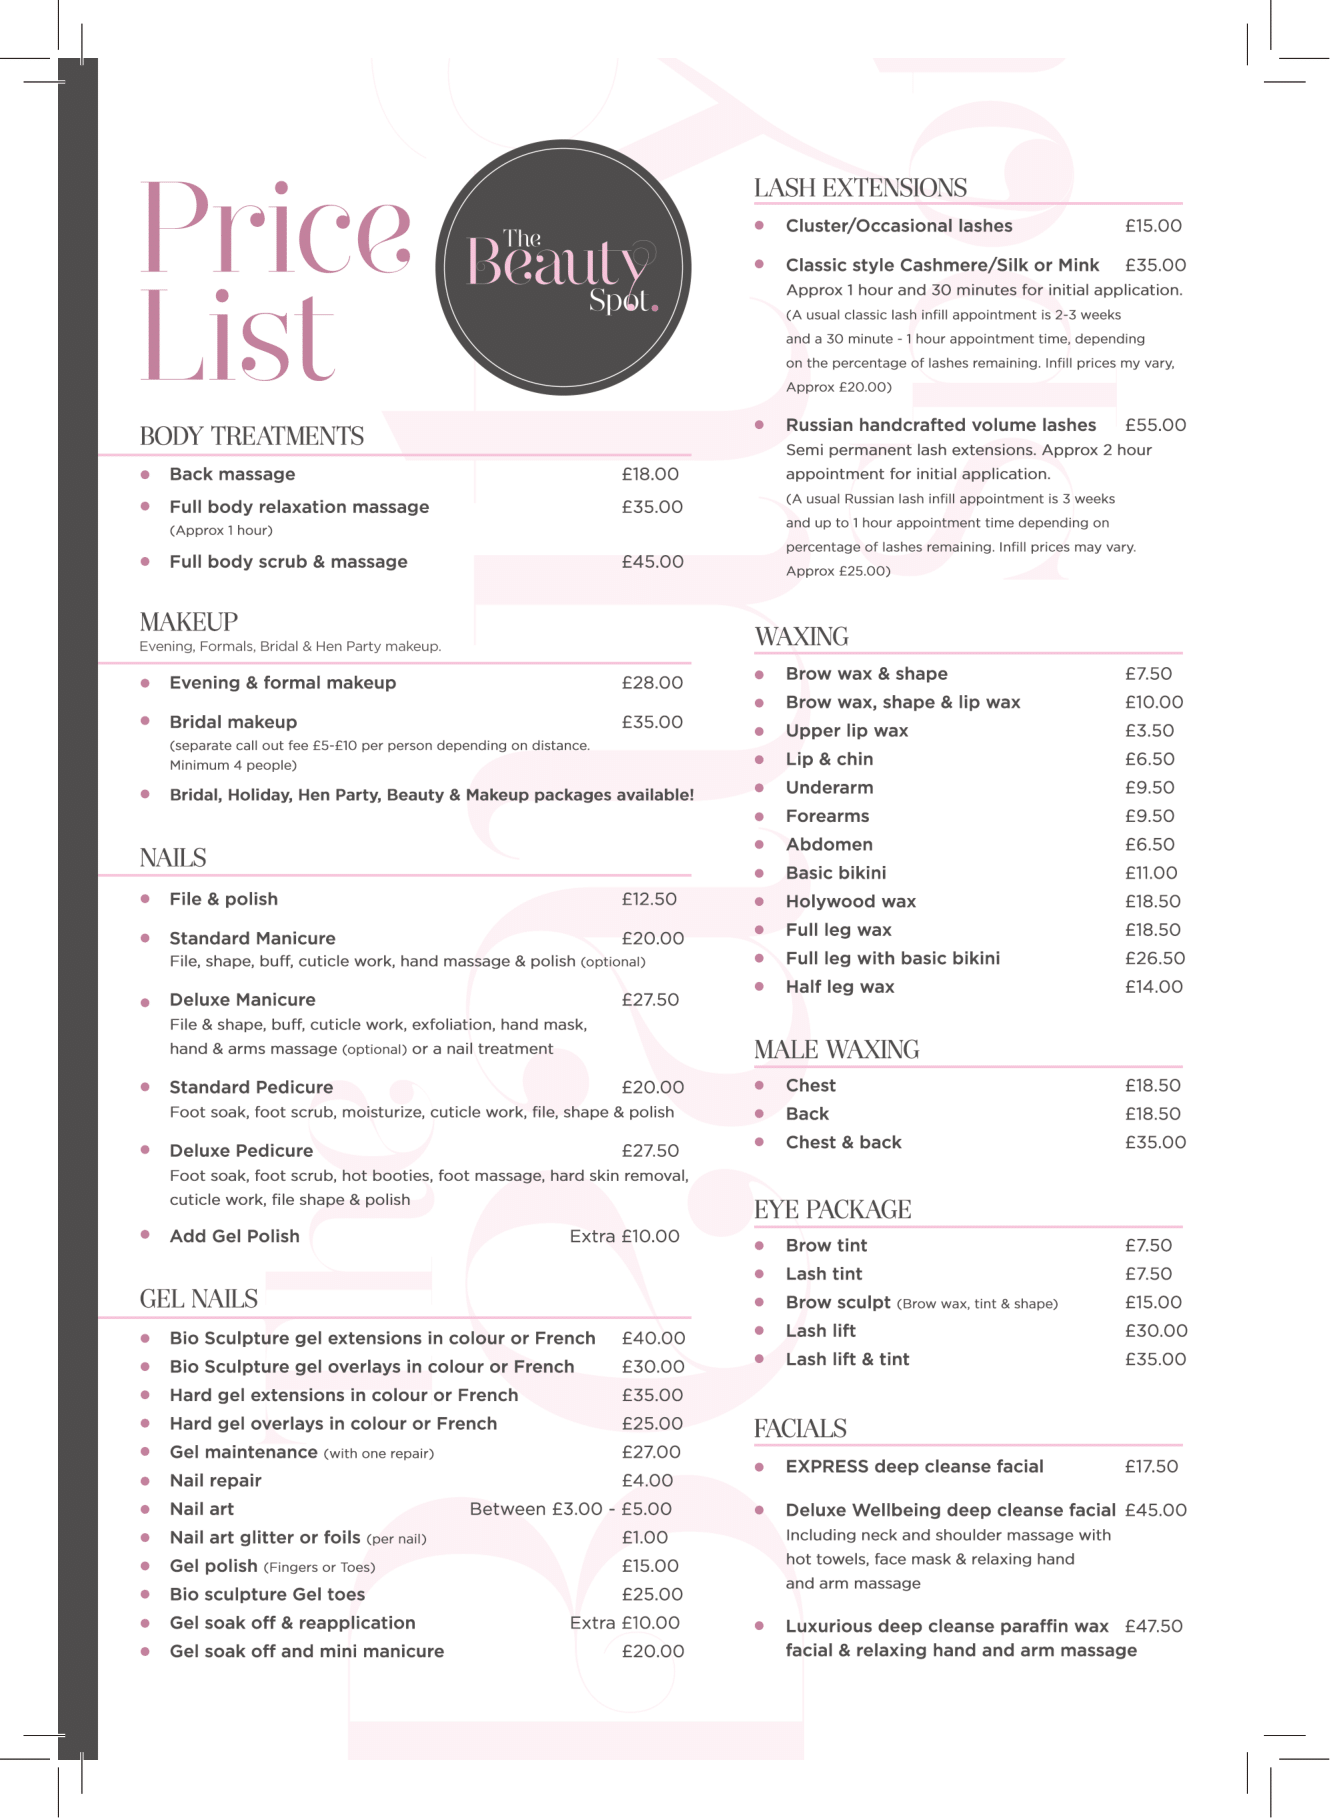 The Beauty Spot Price List